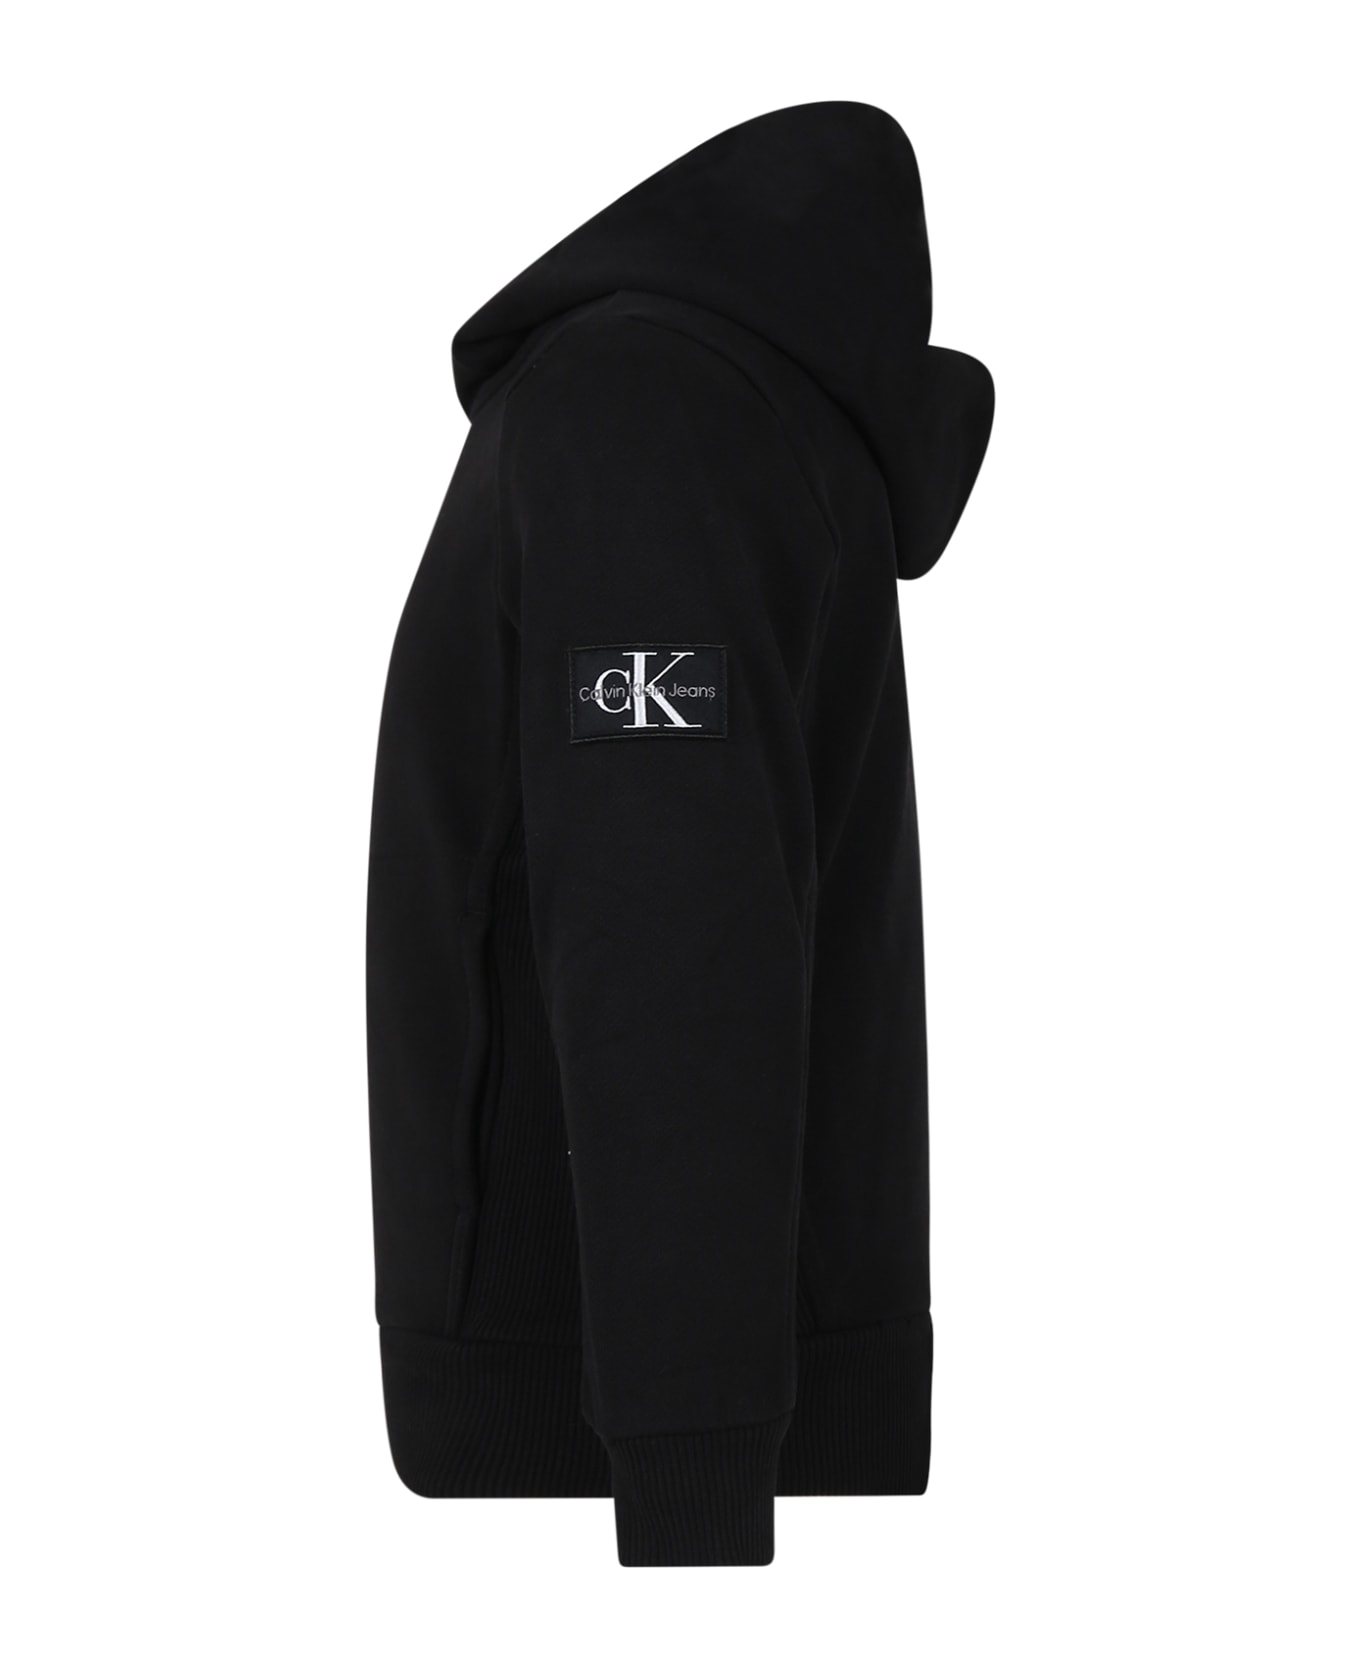 Calvin Klein Black Sweatshir For Boy With Logo - Black